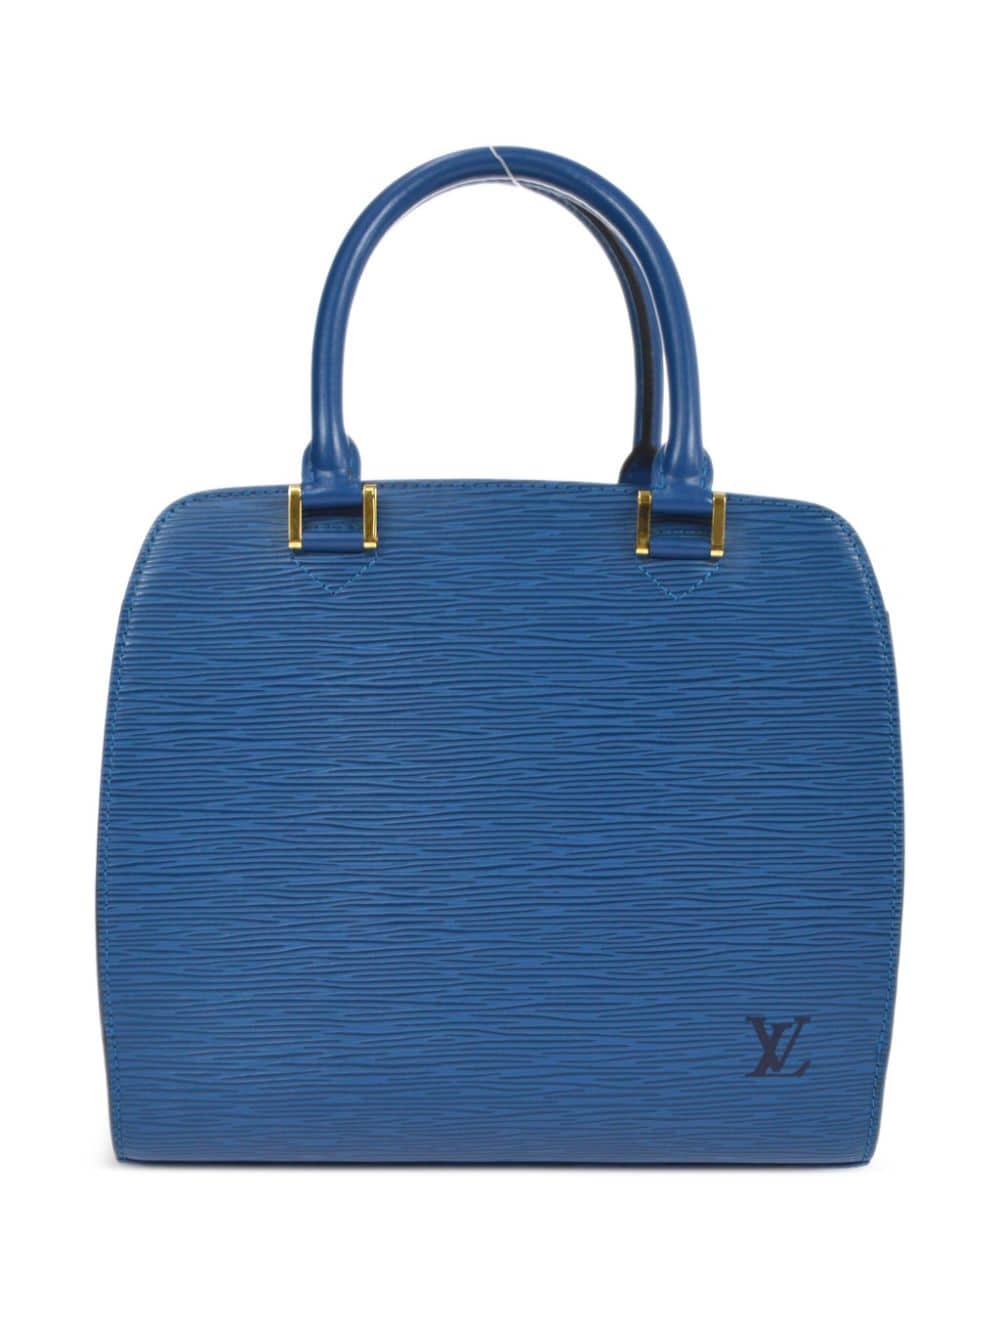 Pre-Owned Louis Vuitton Voyager Bag 211862/4 | Rebag